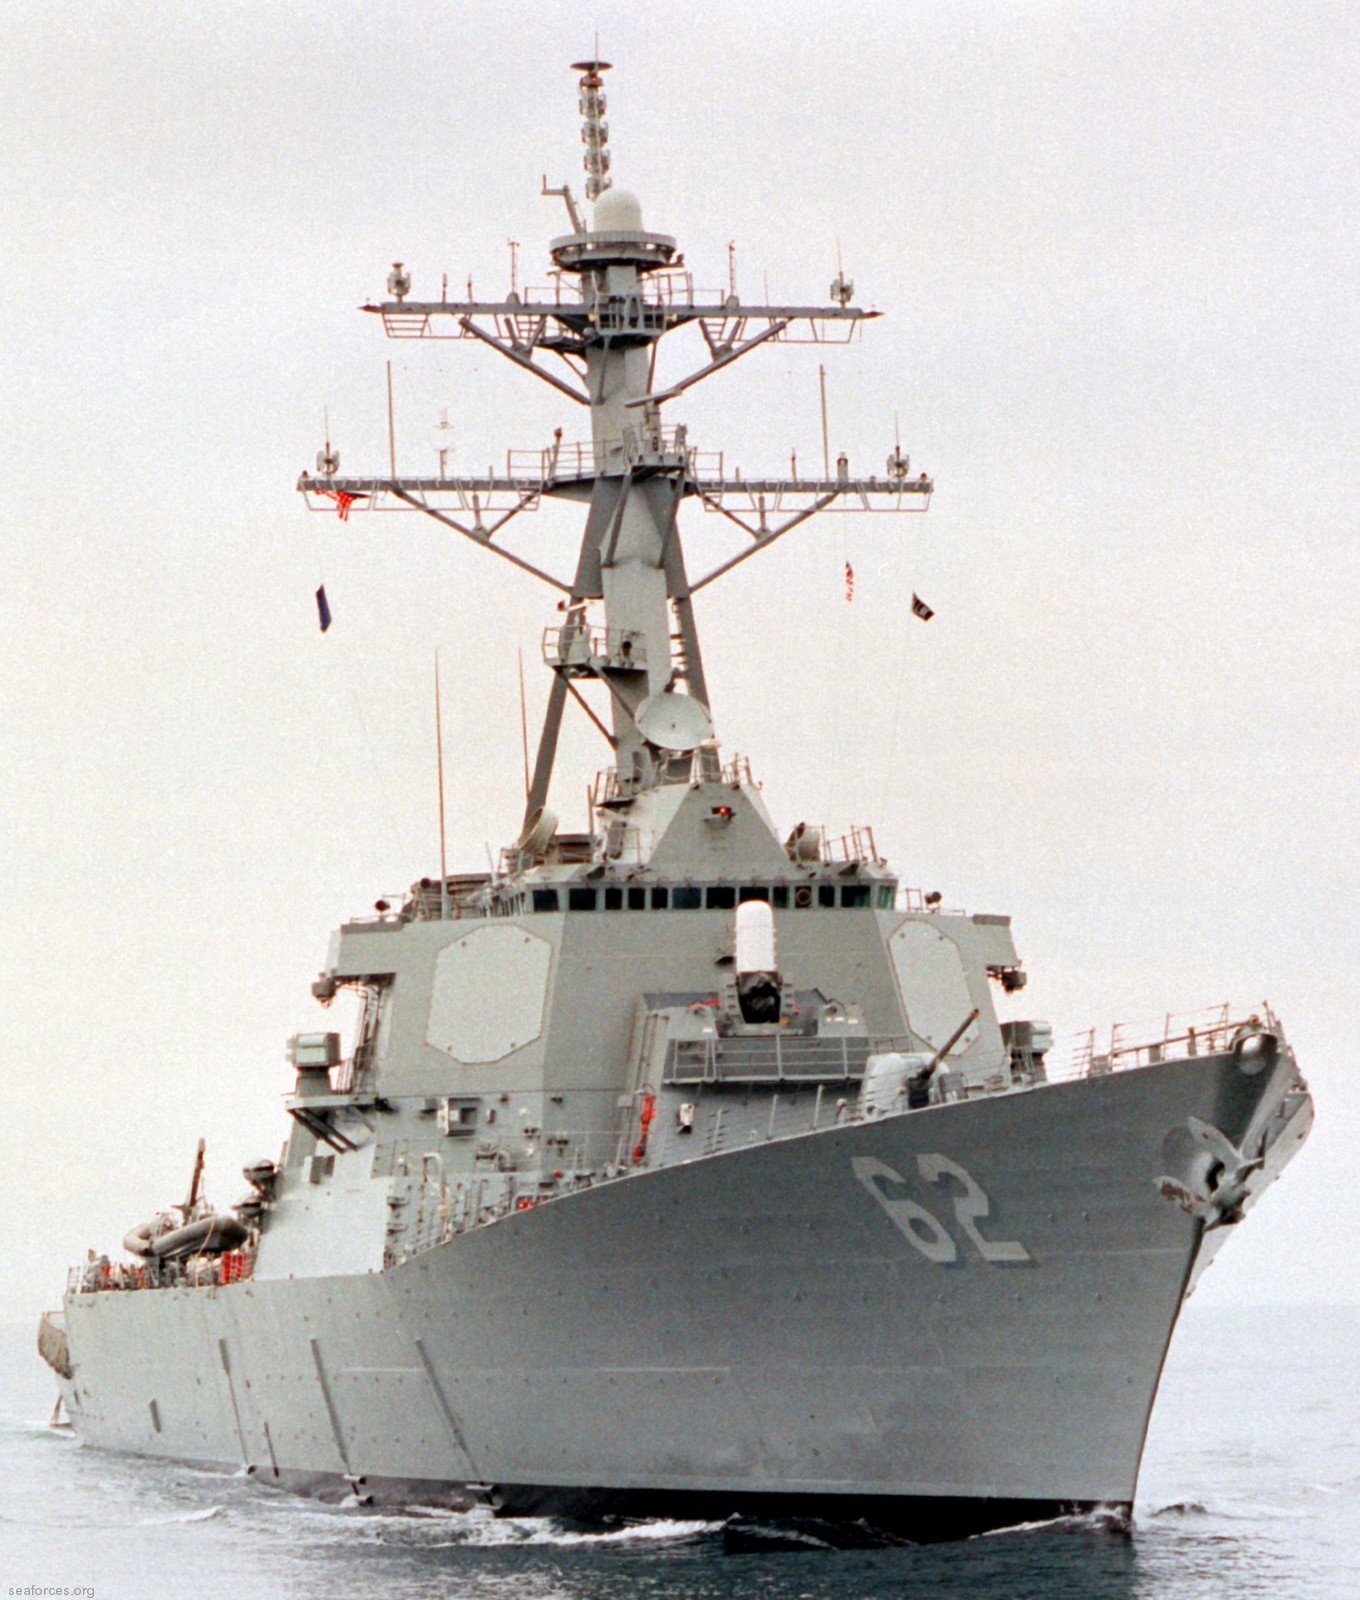 ddg-62 uss fitzgerald guided missile destroyer 1995 103 sea trials bath iron works maine